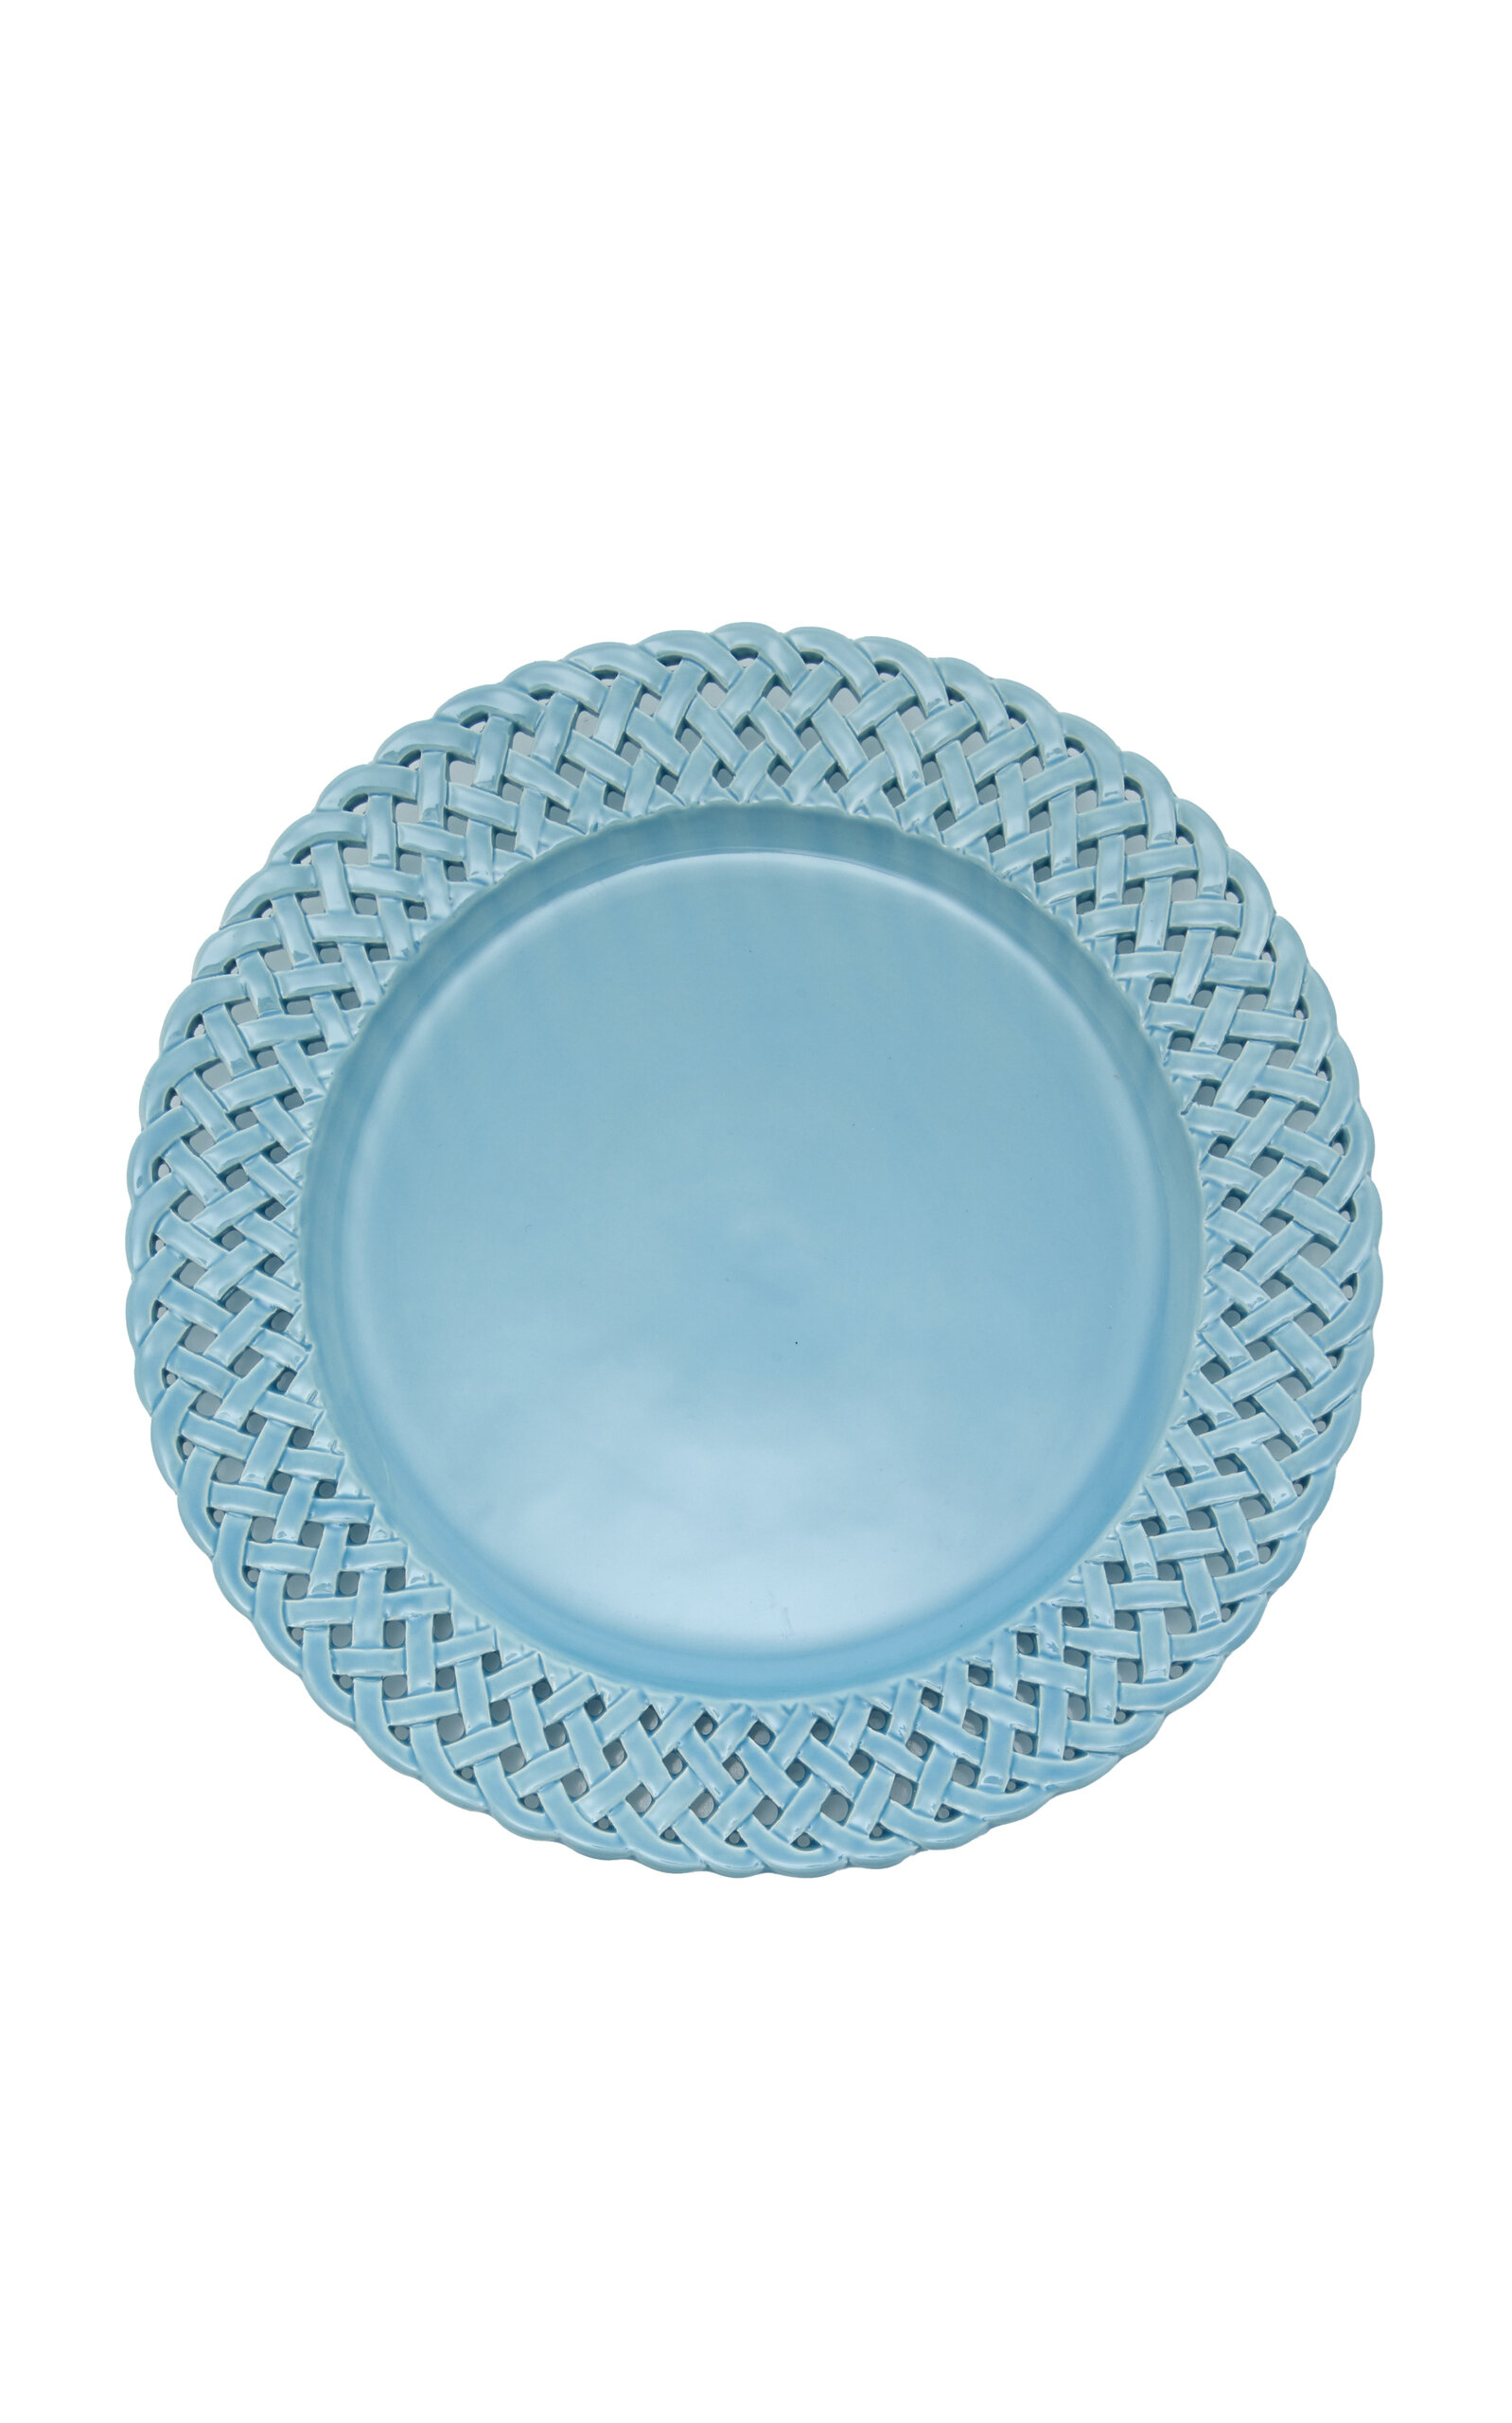 Moda Domus Hopenwork Creamware Charger Plate In Blue